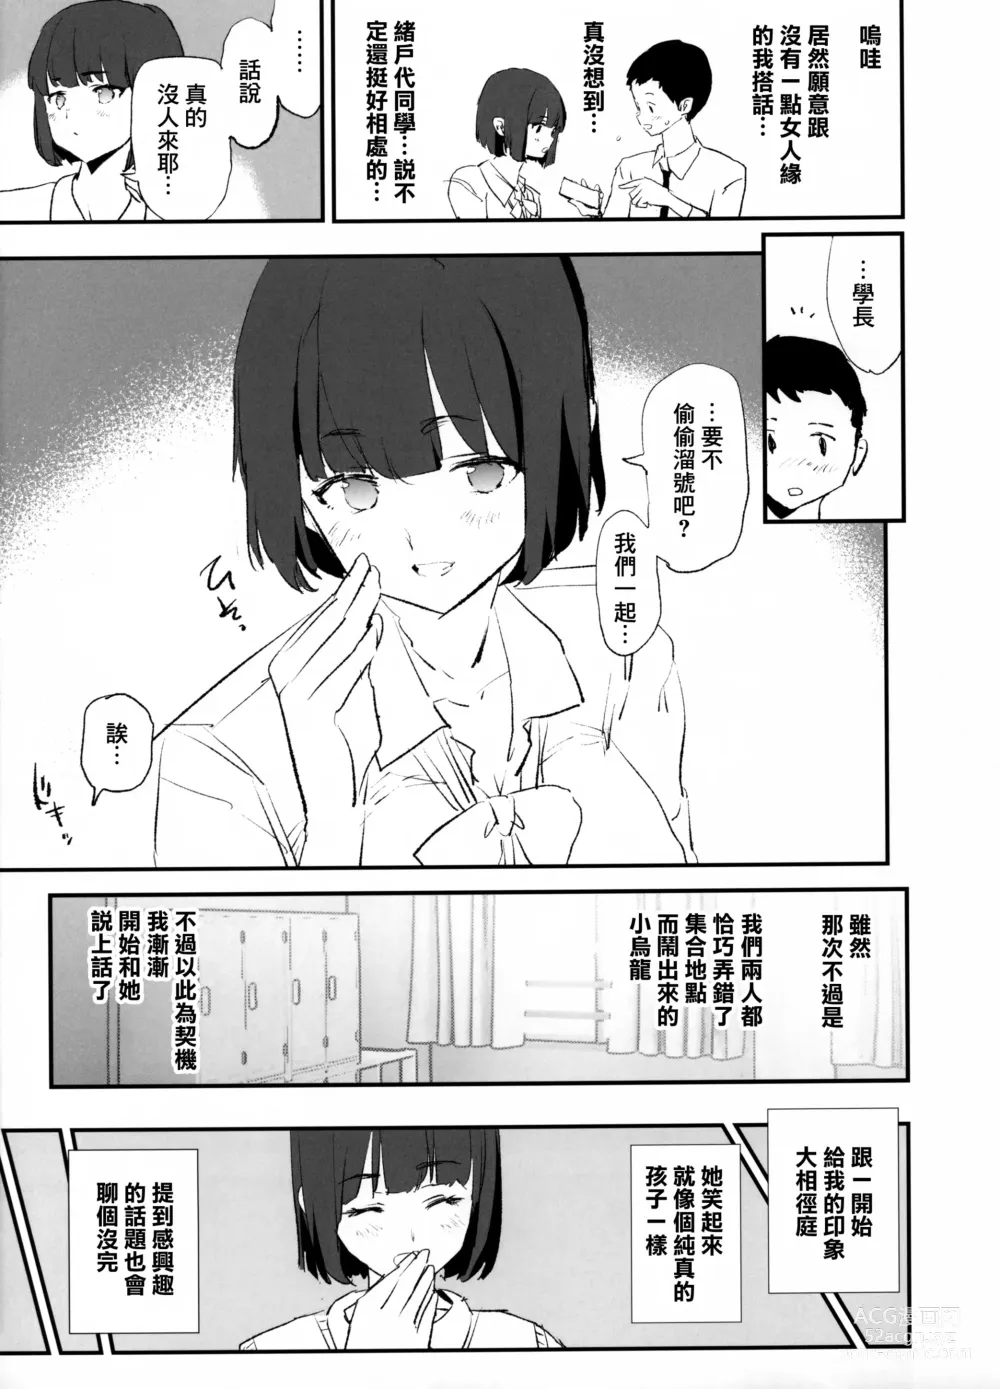 Page 5 of doujinshi 唯獨沒有叫上我的飛機杯合宿 + 紗季學姐